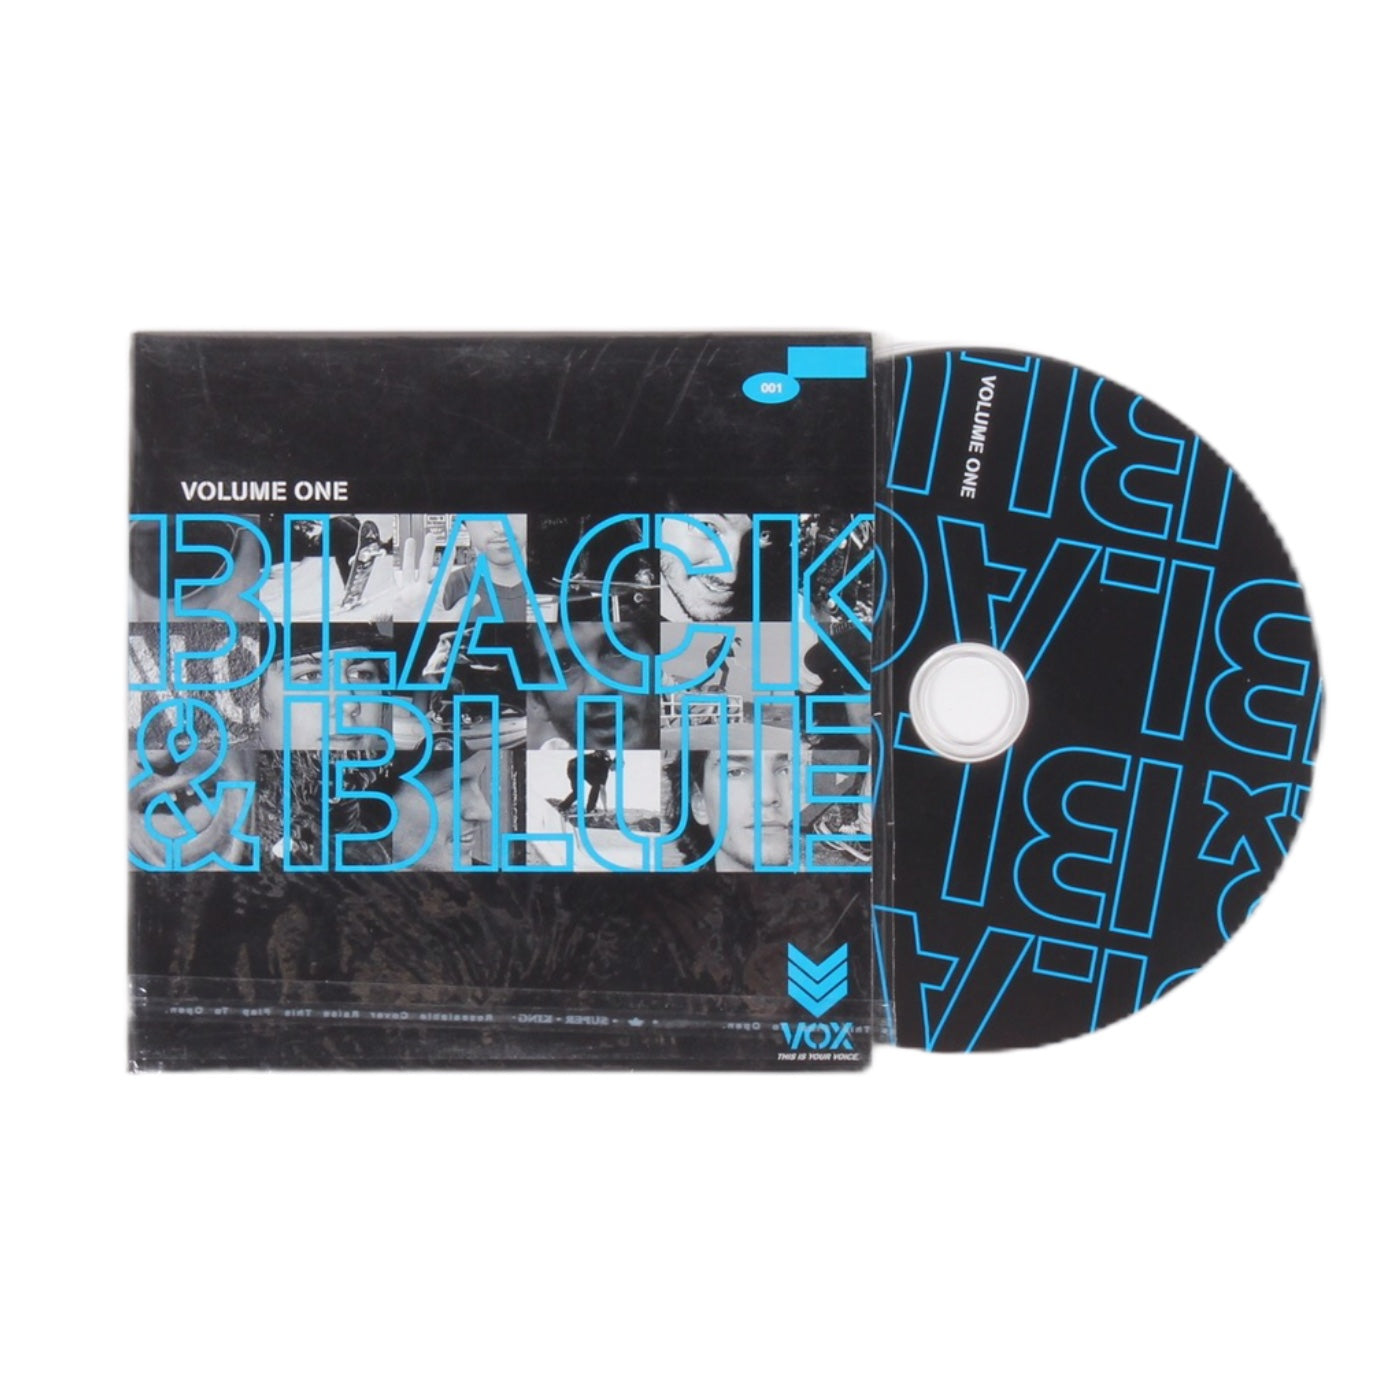 Vox Black And Blue Volume 1 DVD